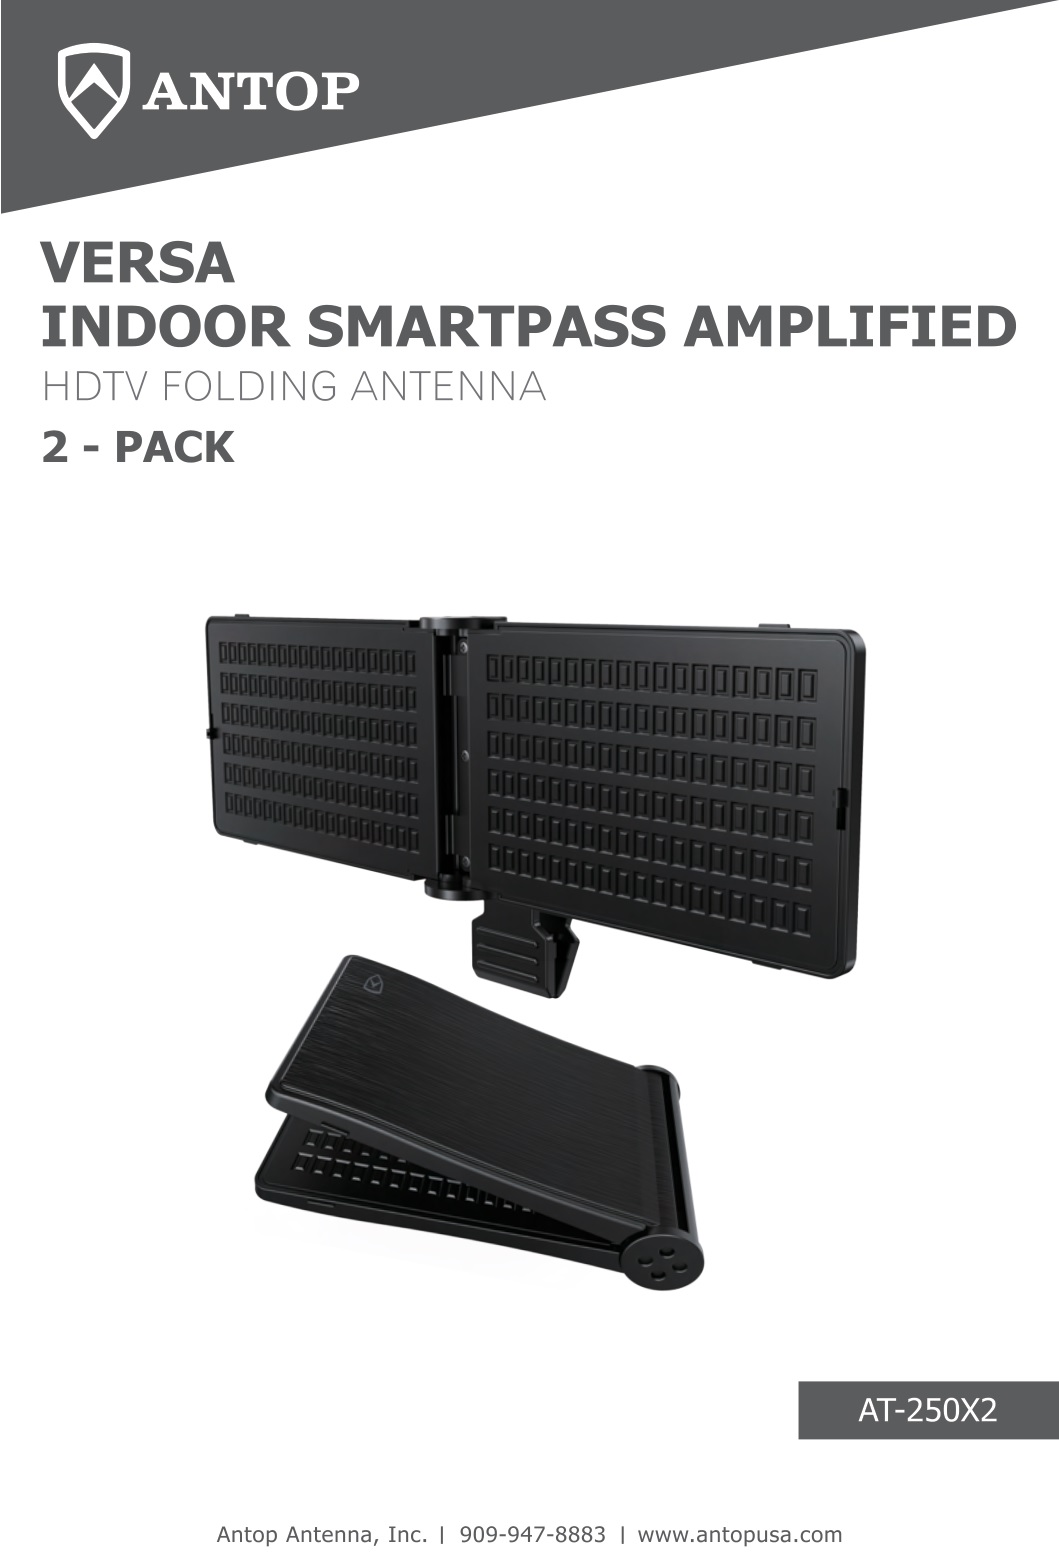 ANTOP AT-250X2 2 Pack Versa Indoor Smartpass Amplified HDTV Folding Antenna User Guide